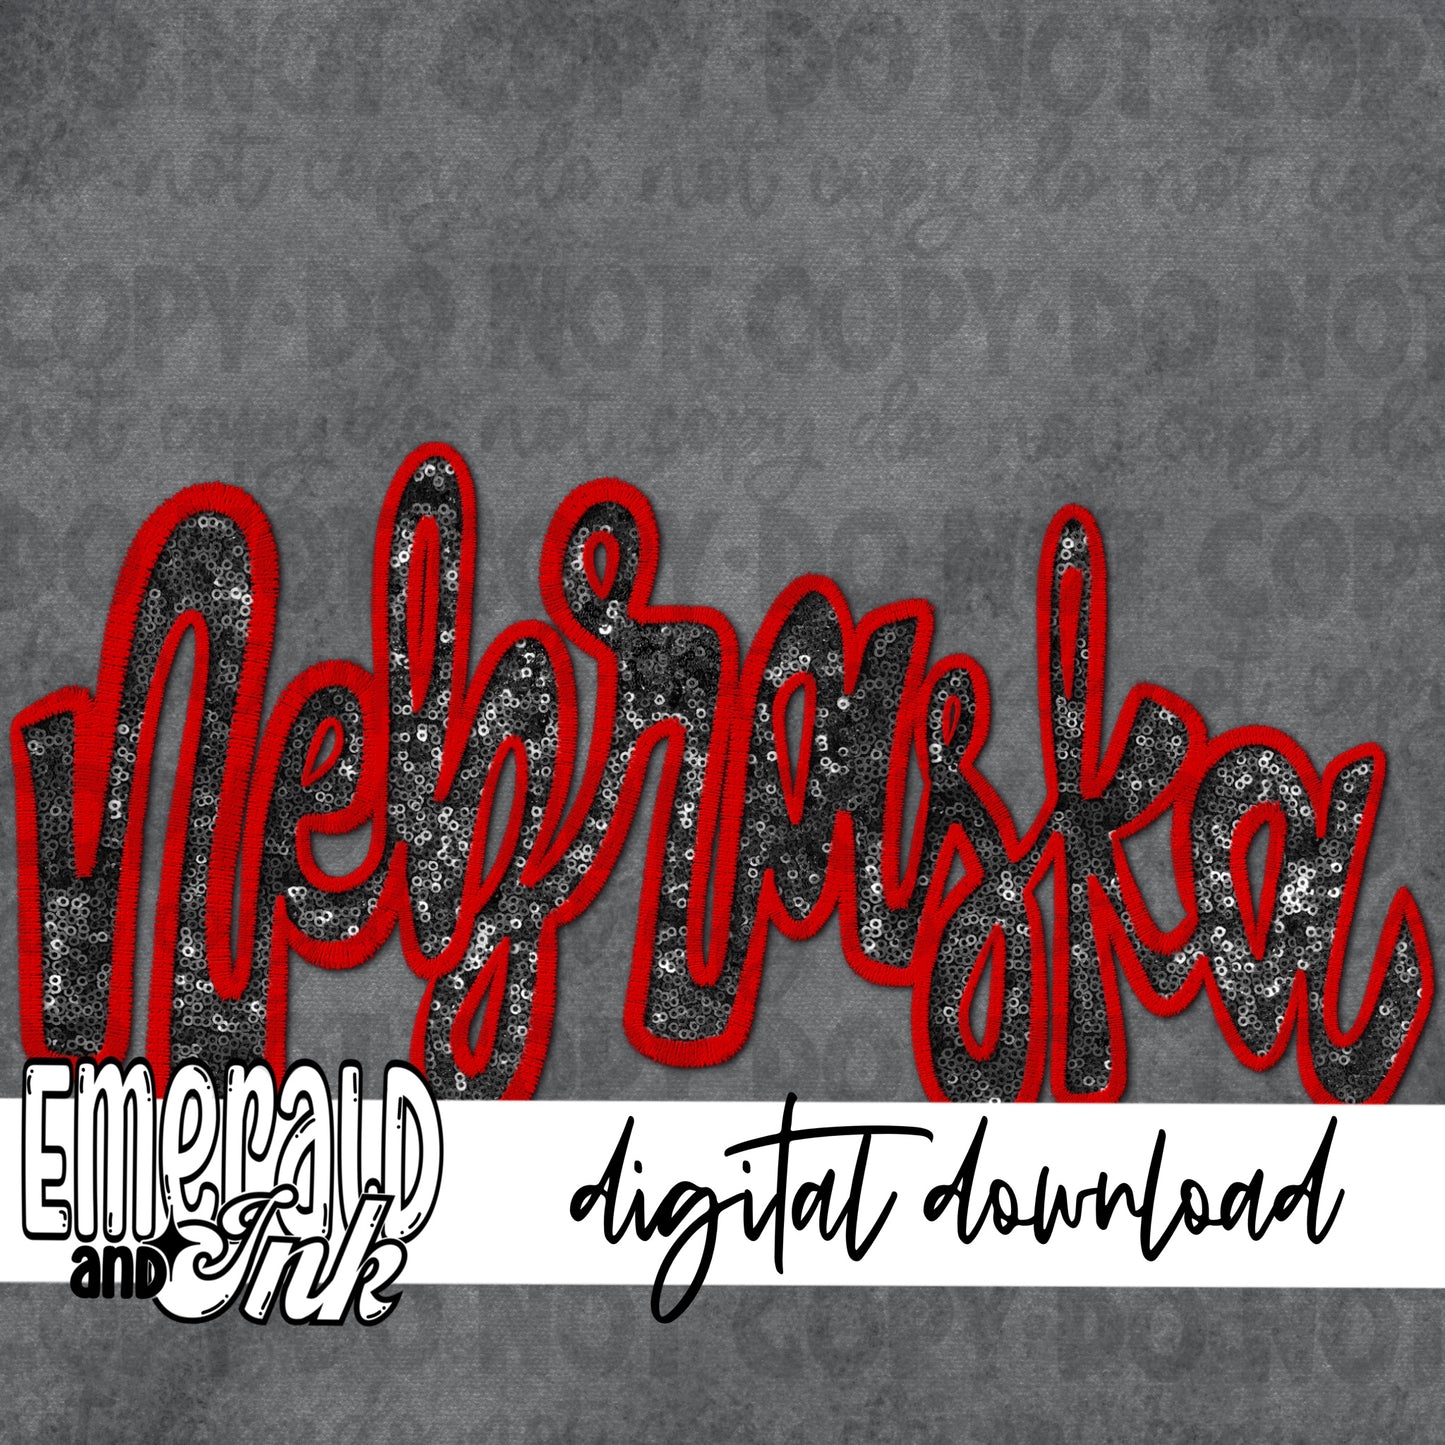 Nebraska Faux Embroidery (red & black) - Digital Download